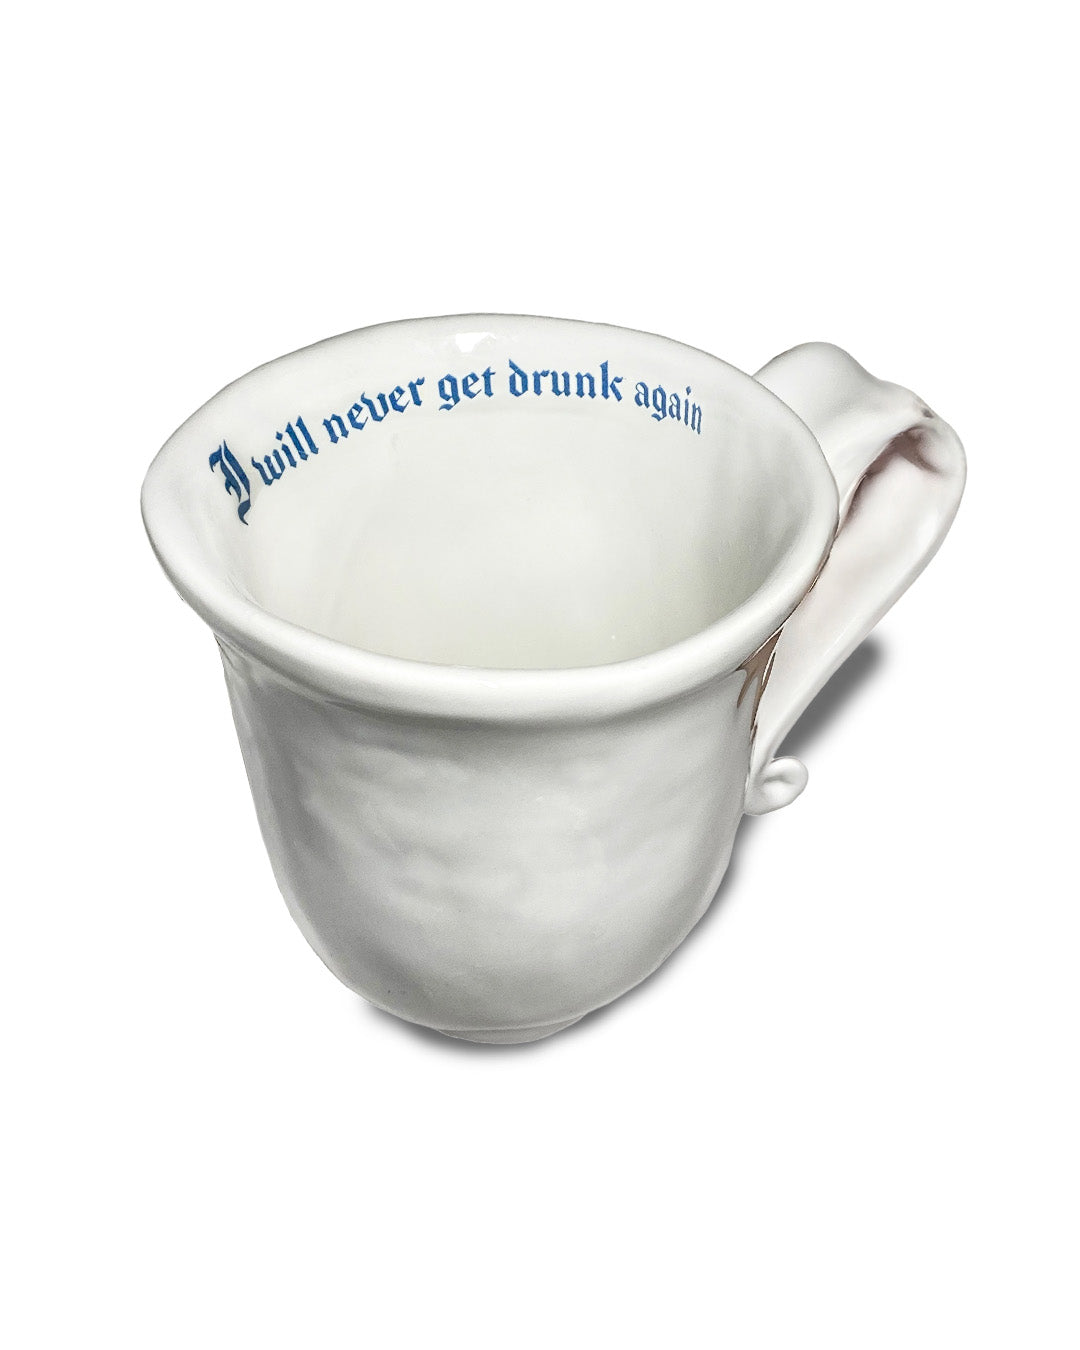 "I will never get drunk again" Sassy Mug